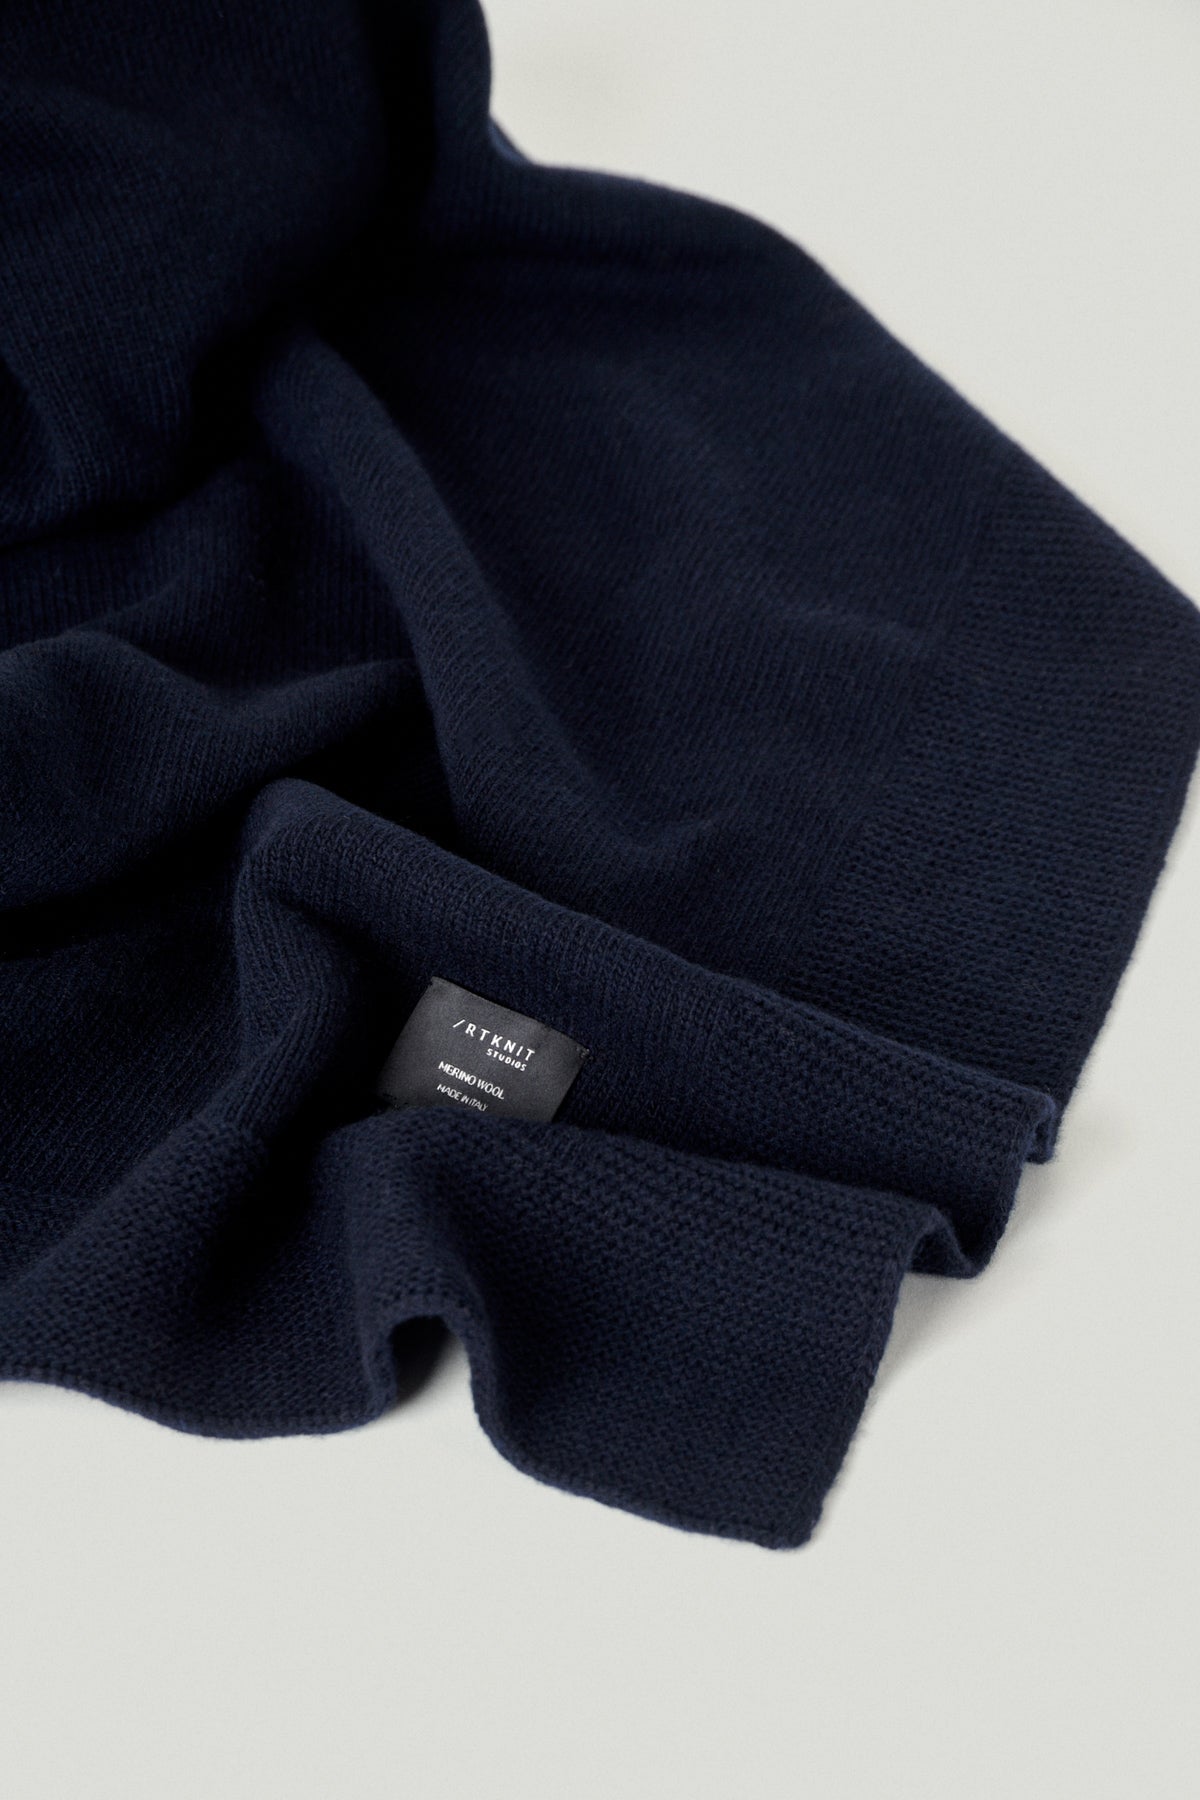 the woolen knit blanket blue navy